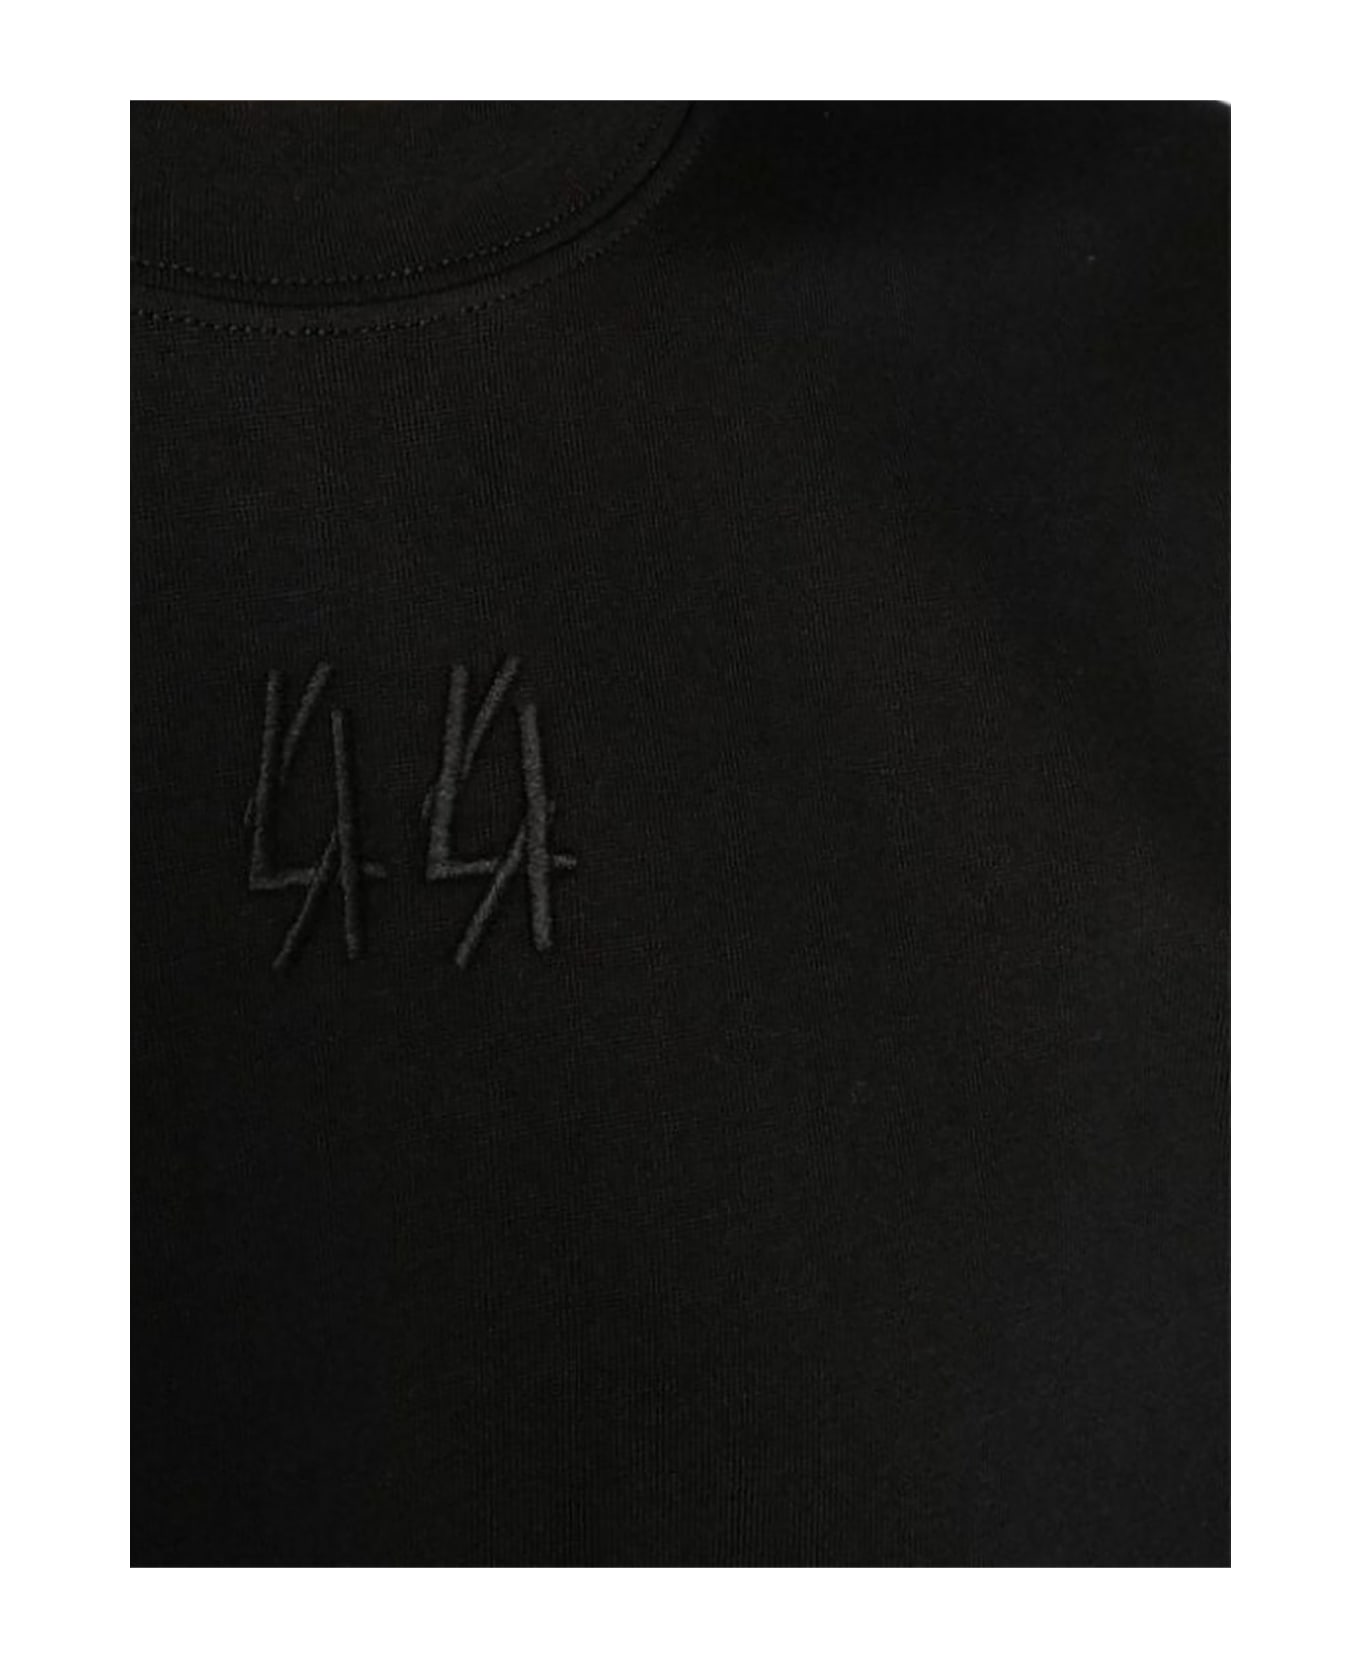 44 Label Group Black Cotton T-shirt - Black+the enemy print